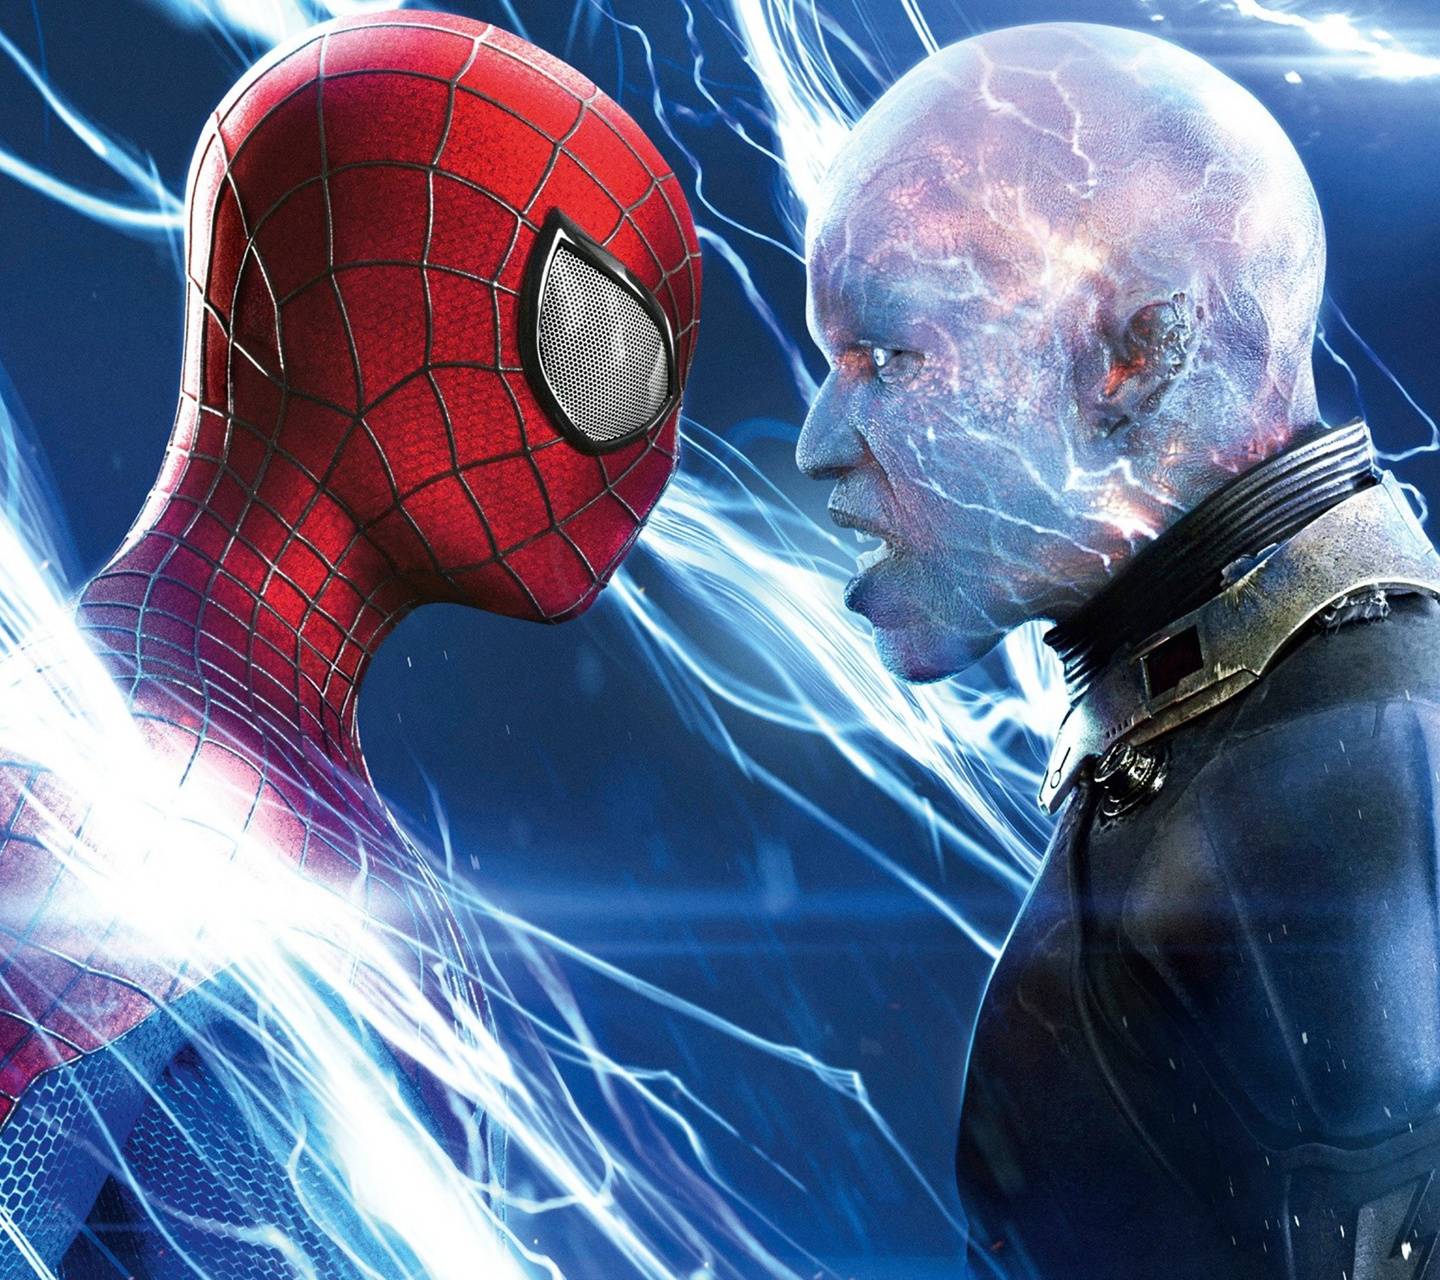 Spiderman vs Electro wallpaper